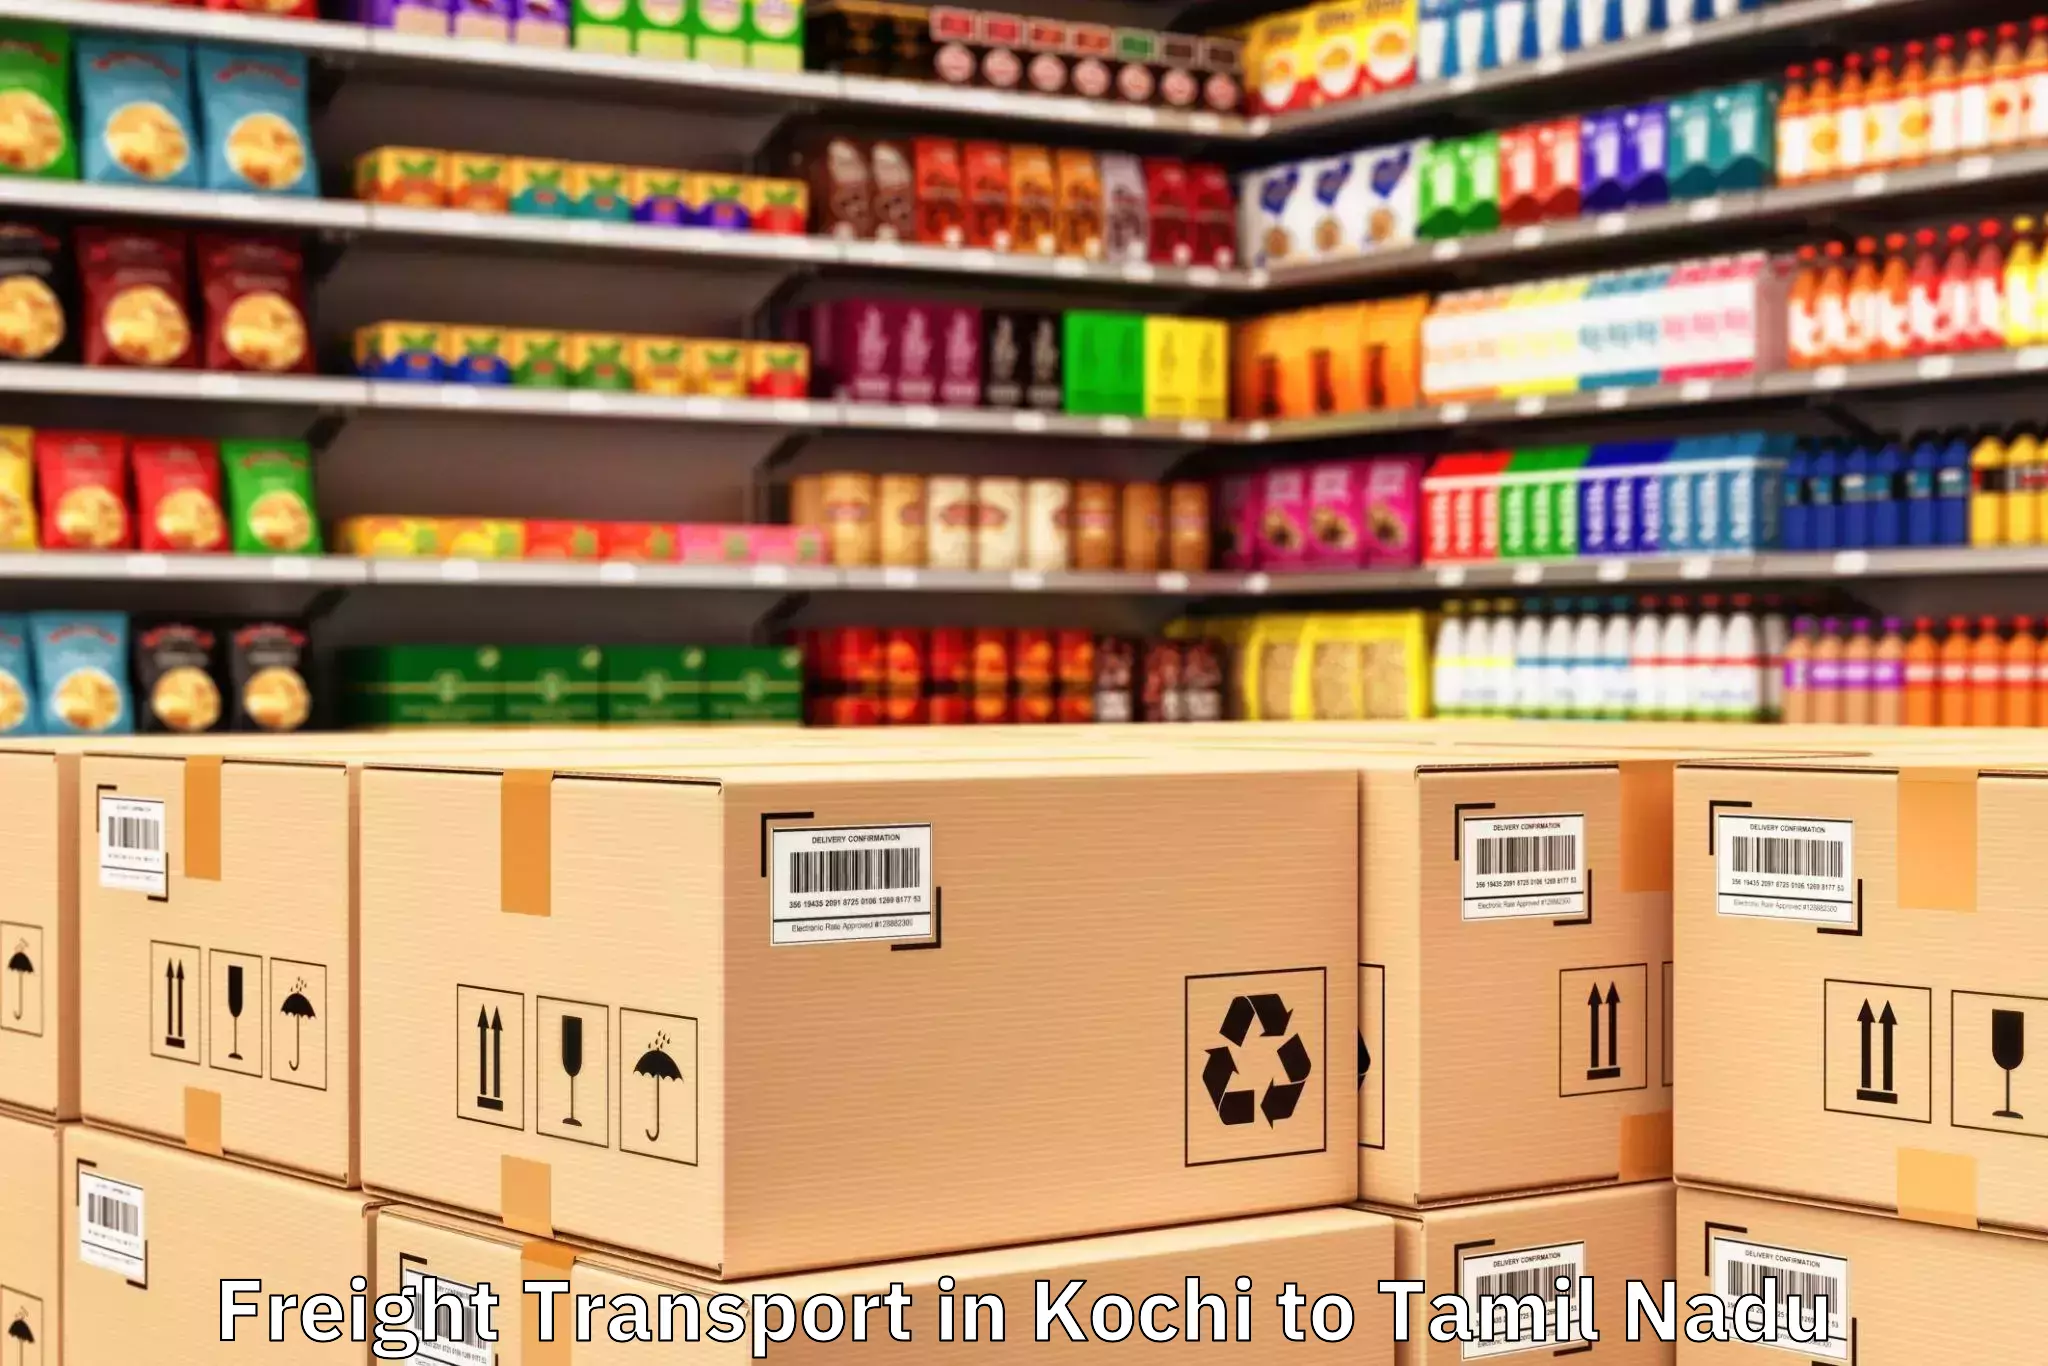 Efficient Kochi to Kodavasal Freight Transport